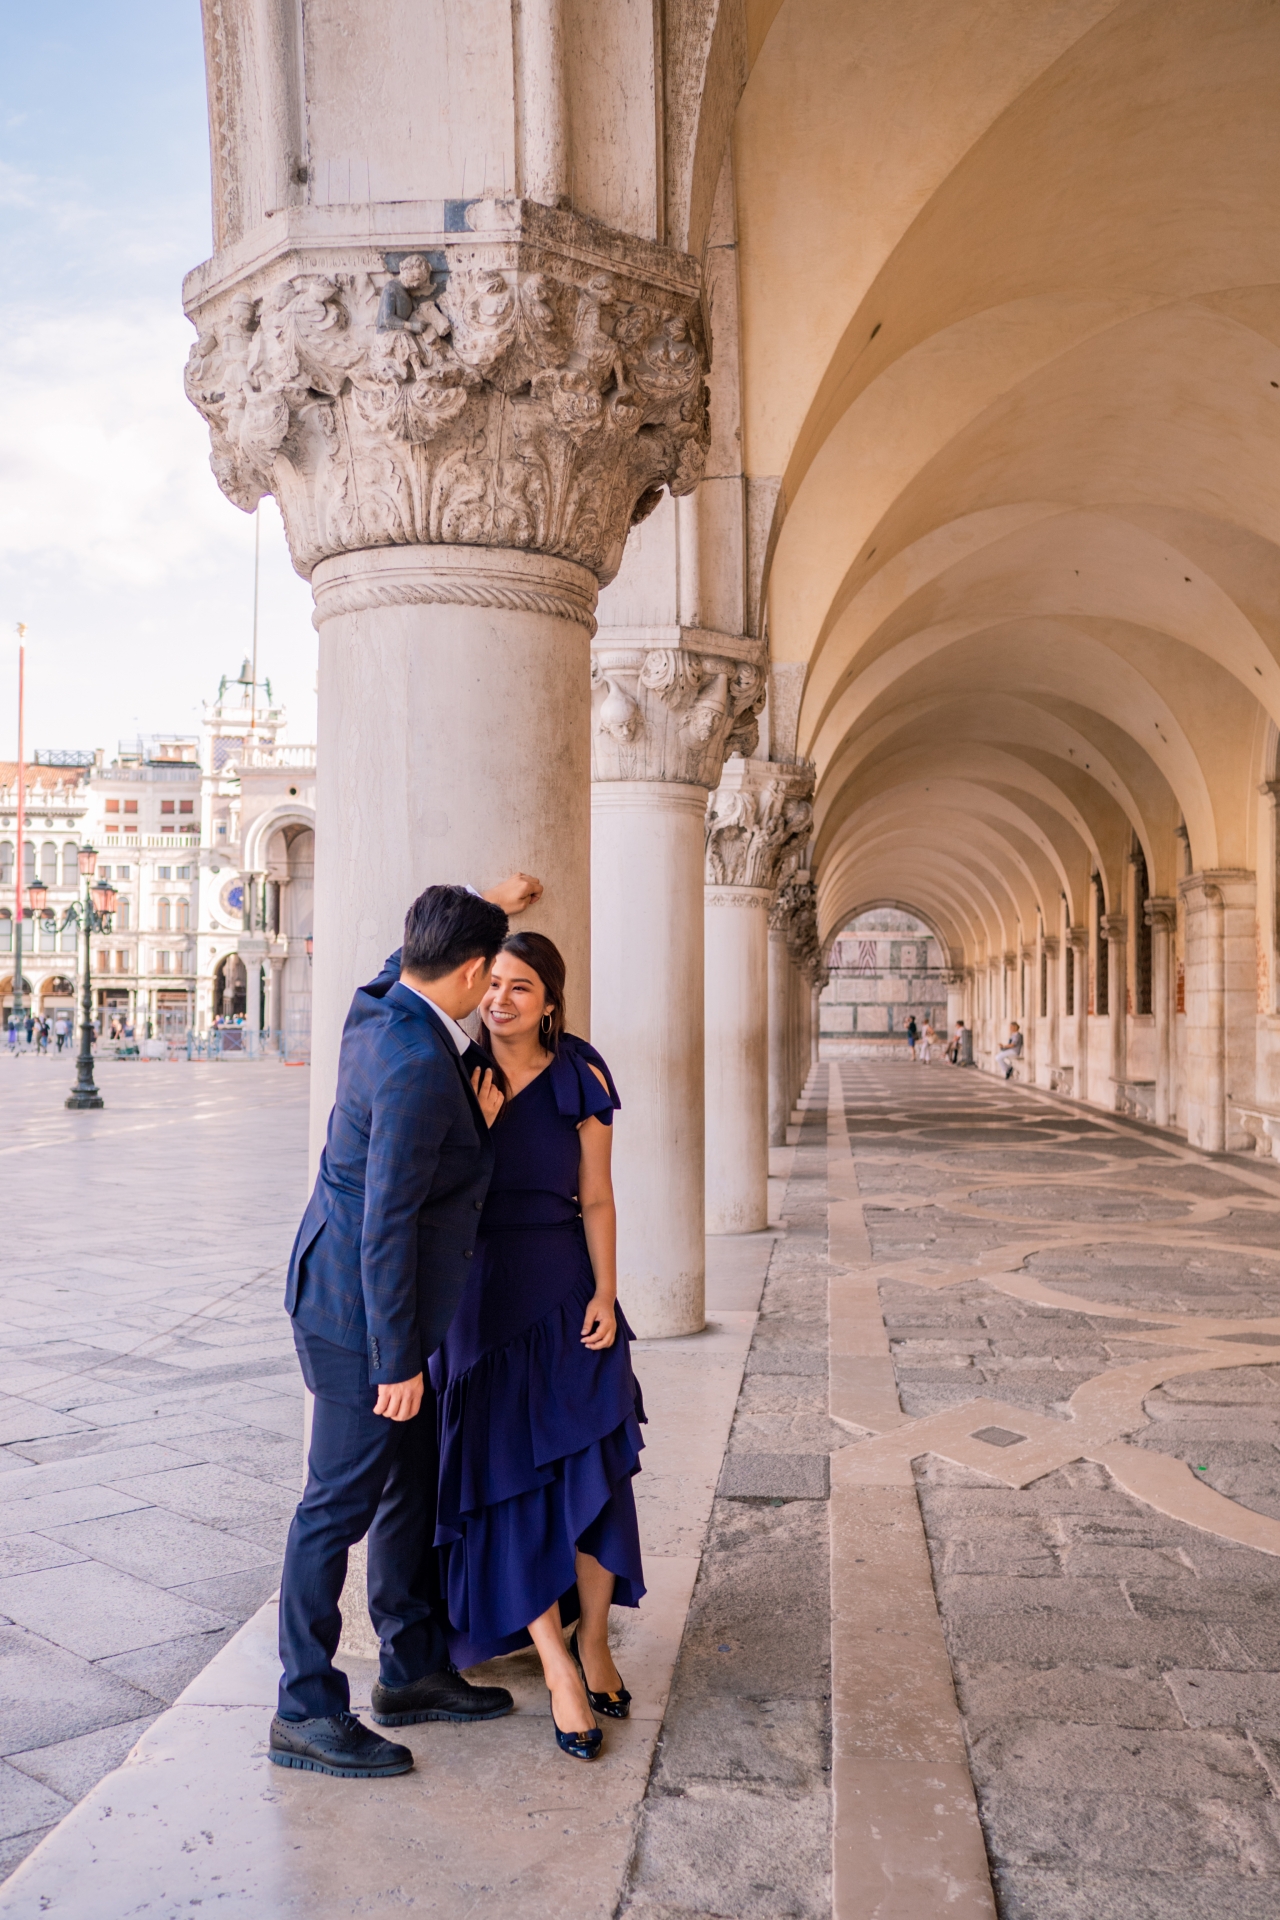 Romantic engagement photo-shoot at sunrise in empty Venice